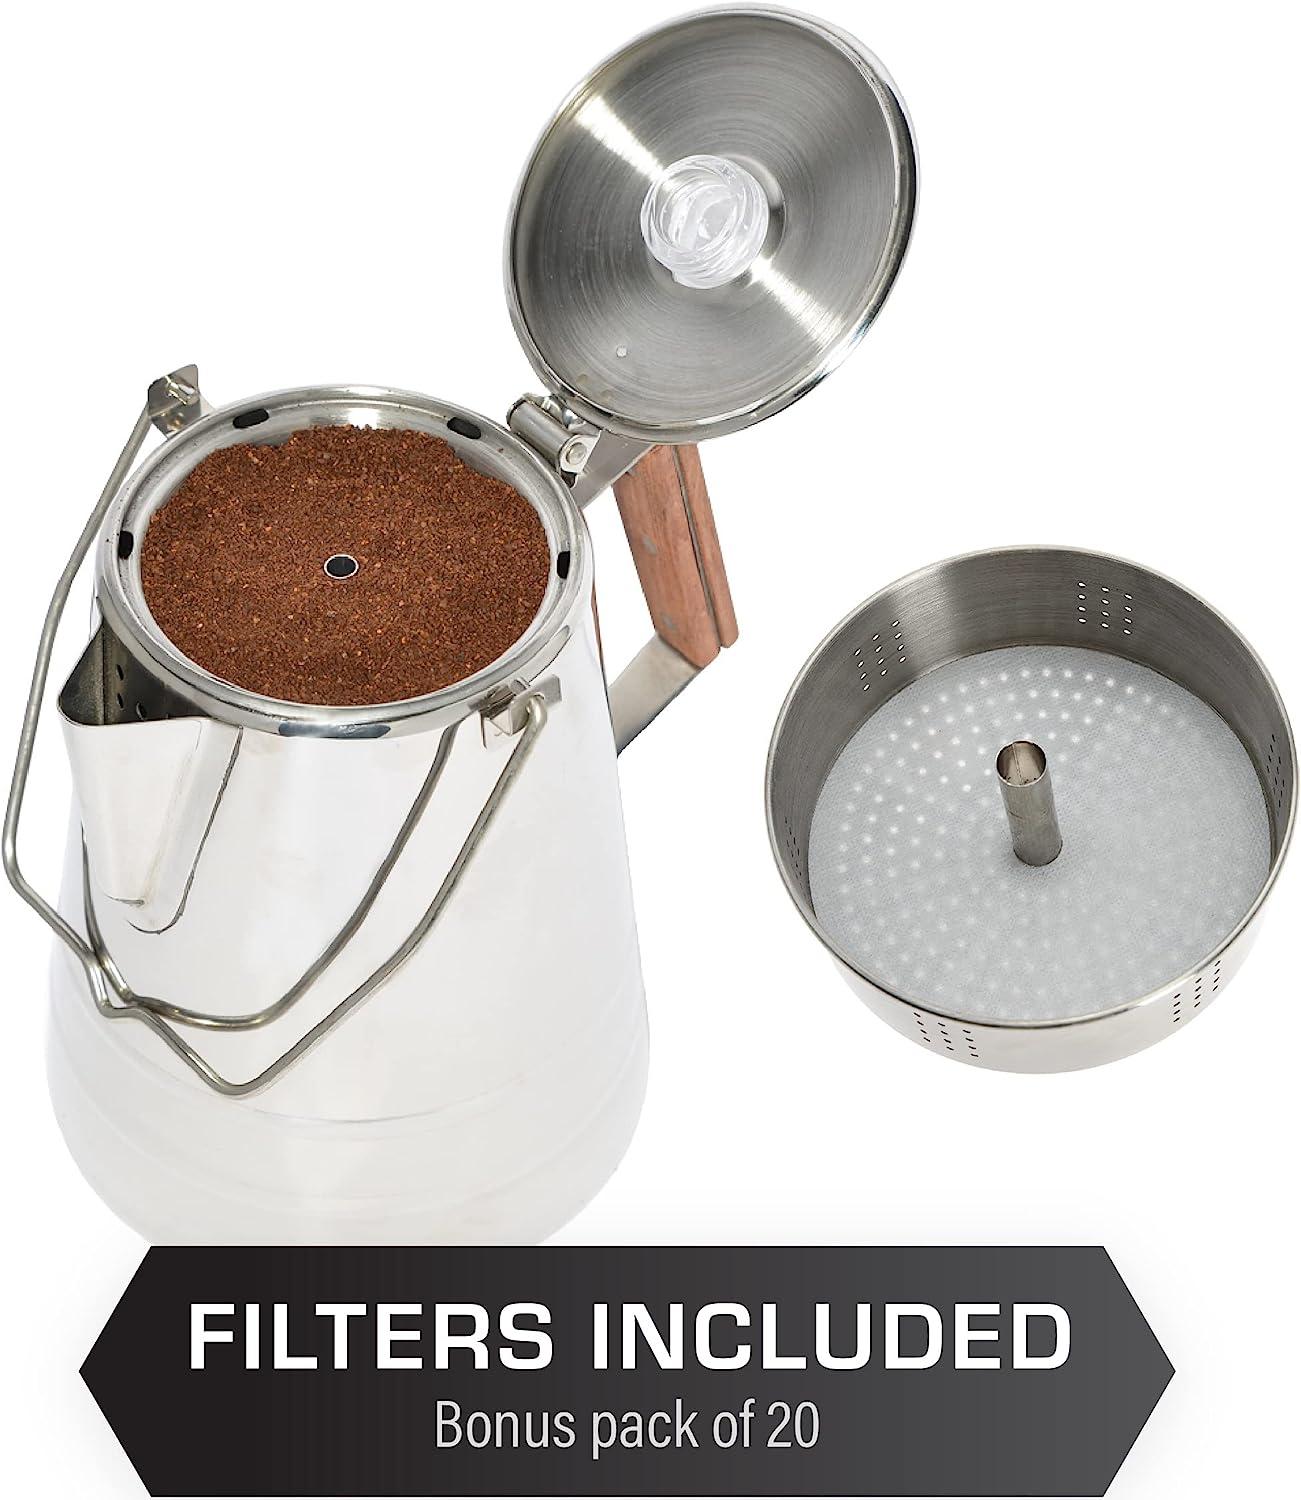 COLETTI Bozeman Coffee Pot Percolator Stainless Steel Coffee Pot